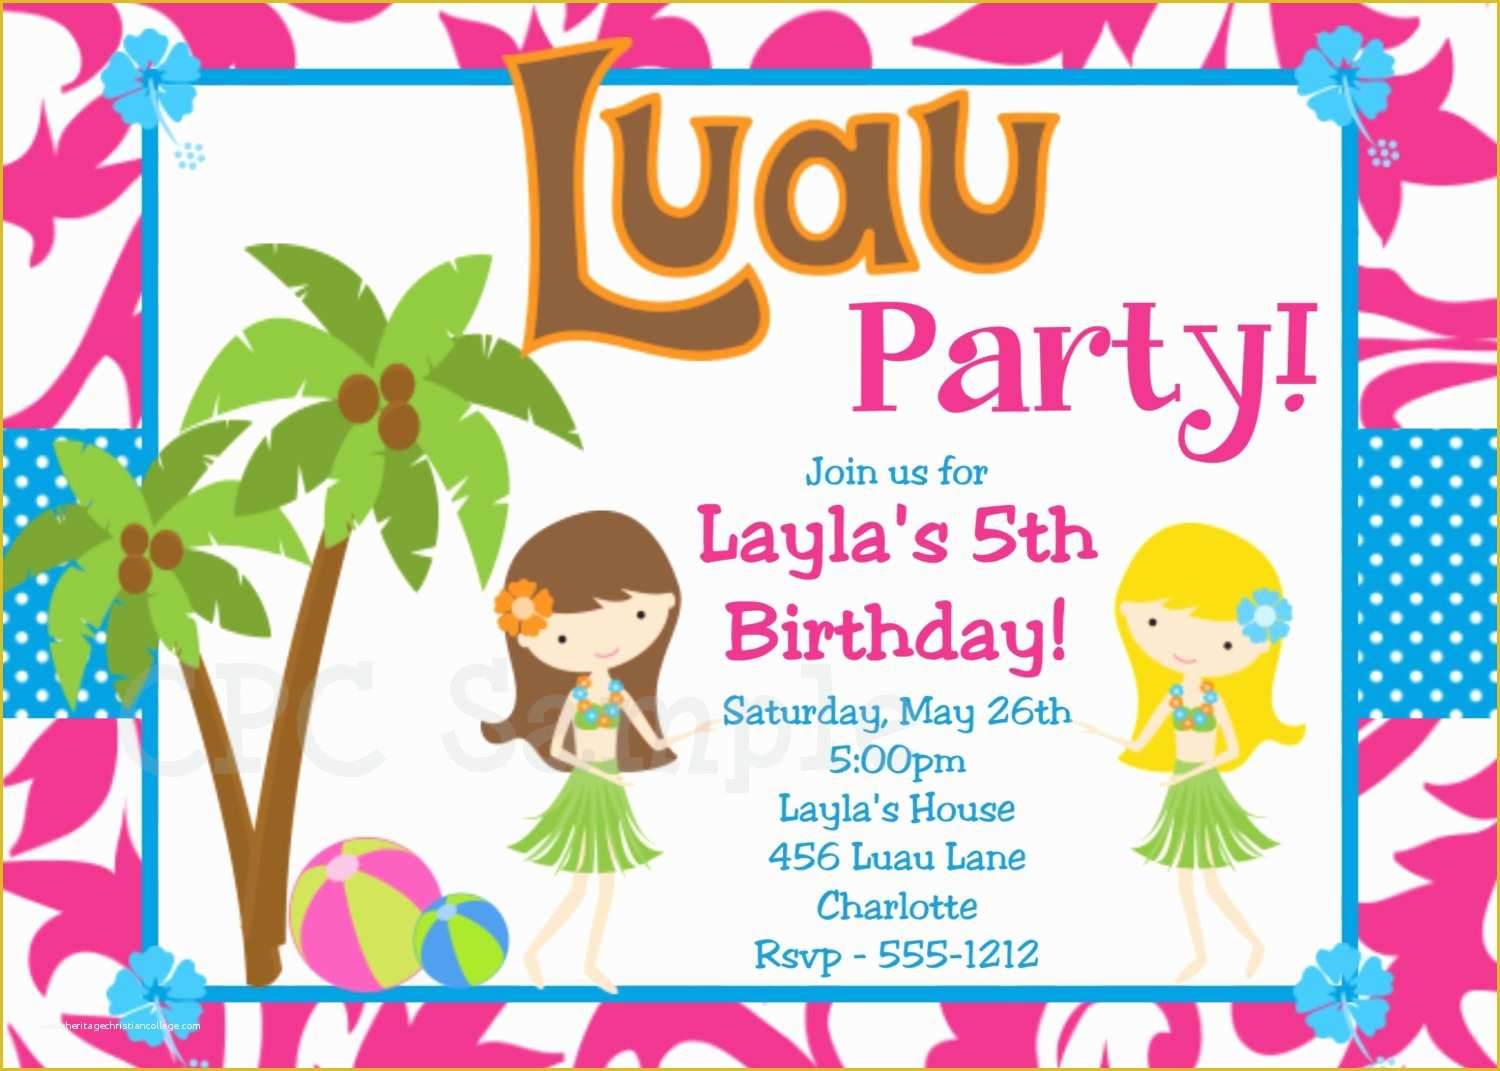 Luau Invitations Templates Free Of 20 Luau Birthday Invitations Designs